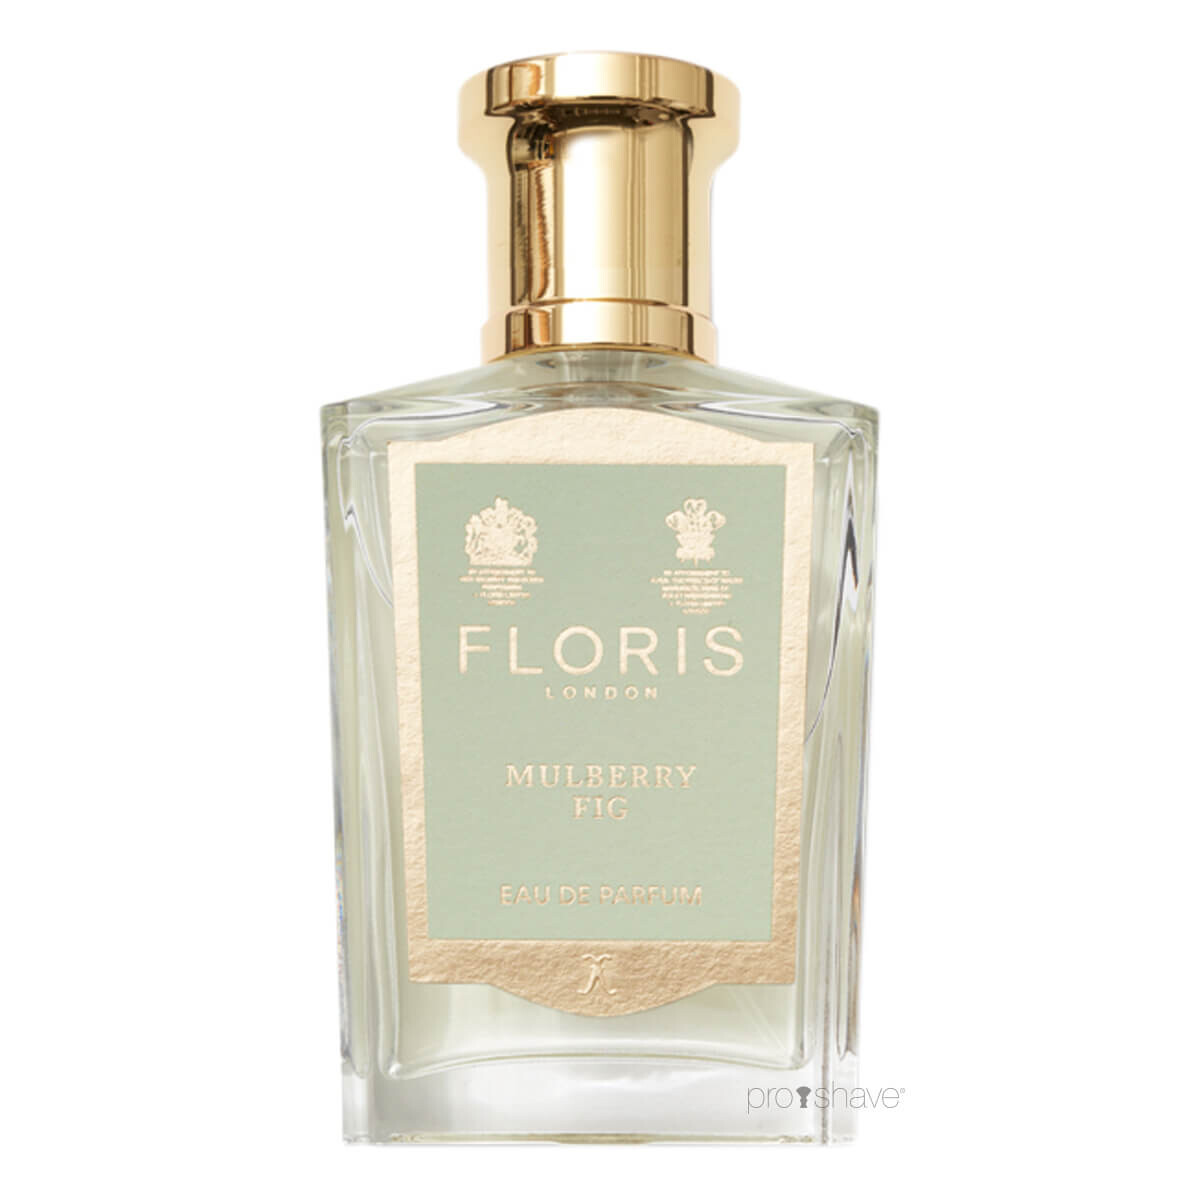 Billede af Floris Mulberry Fig, Eau de Parfum, 50 ml.